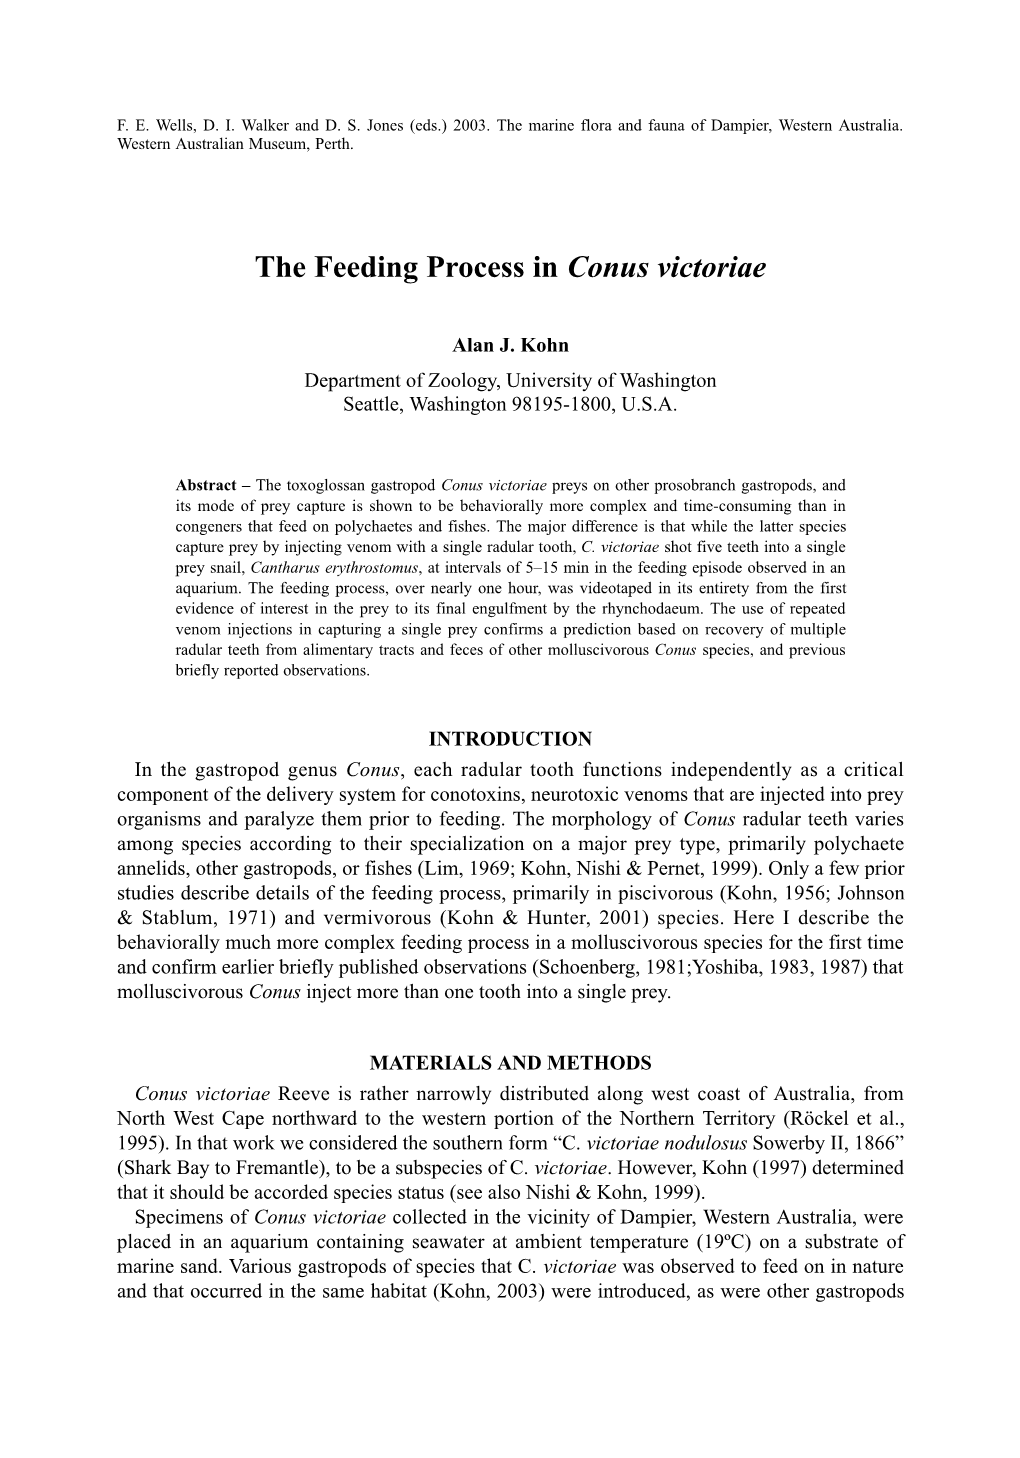 The Feeding Process in Conus Victoriae